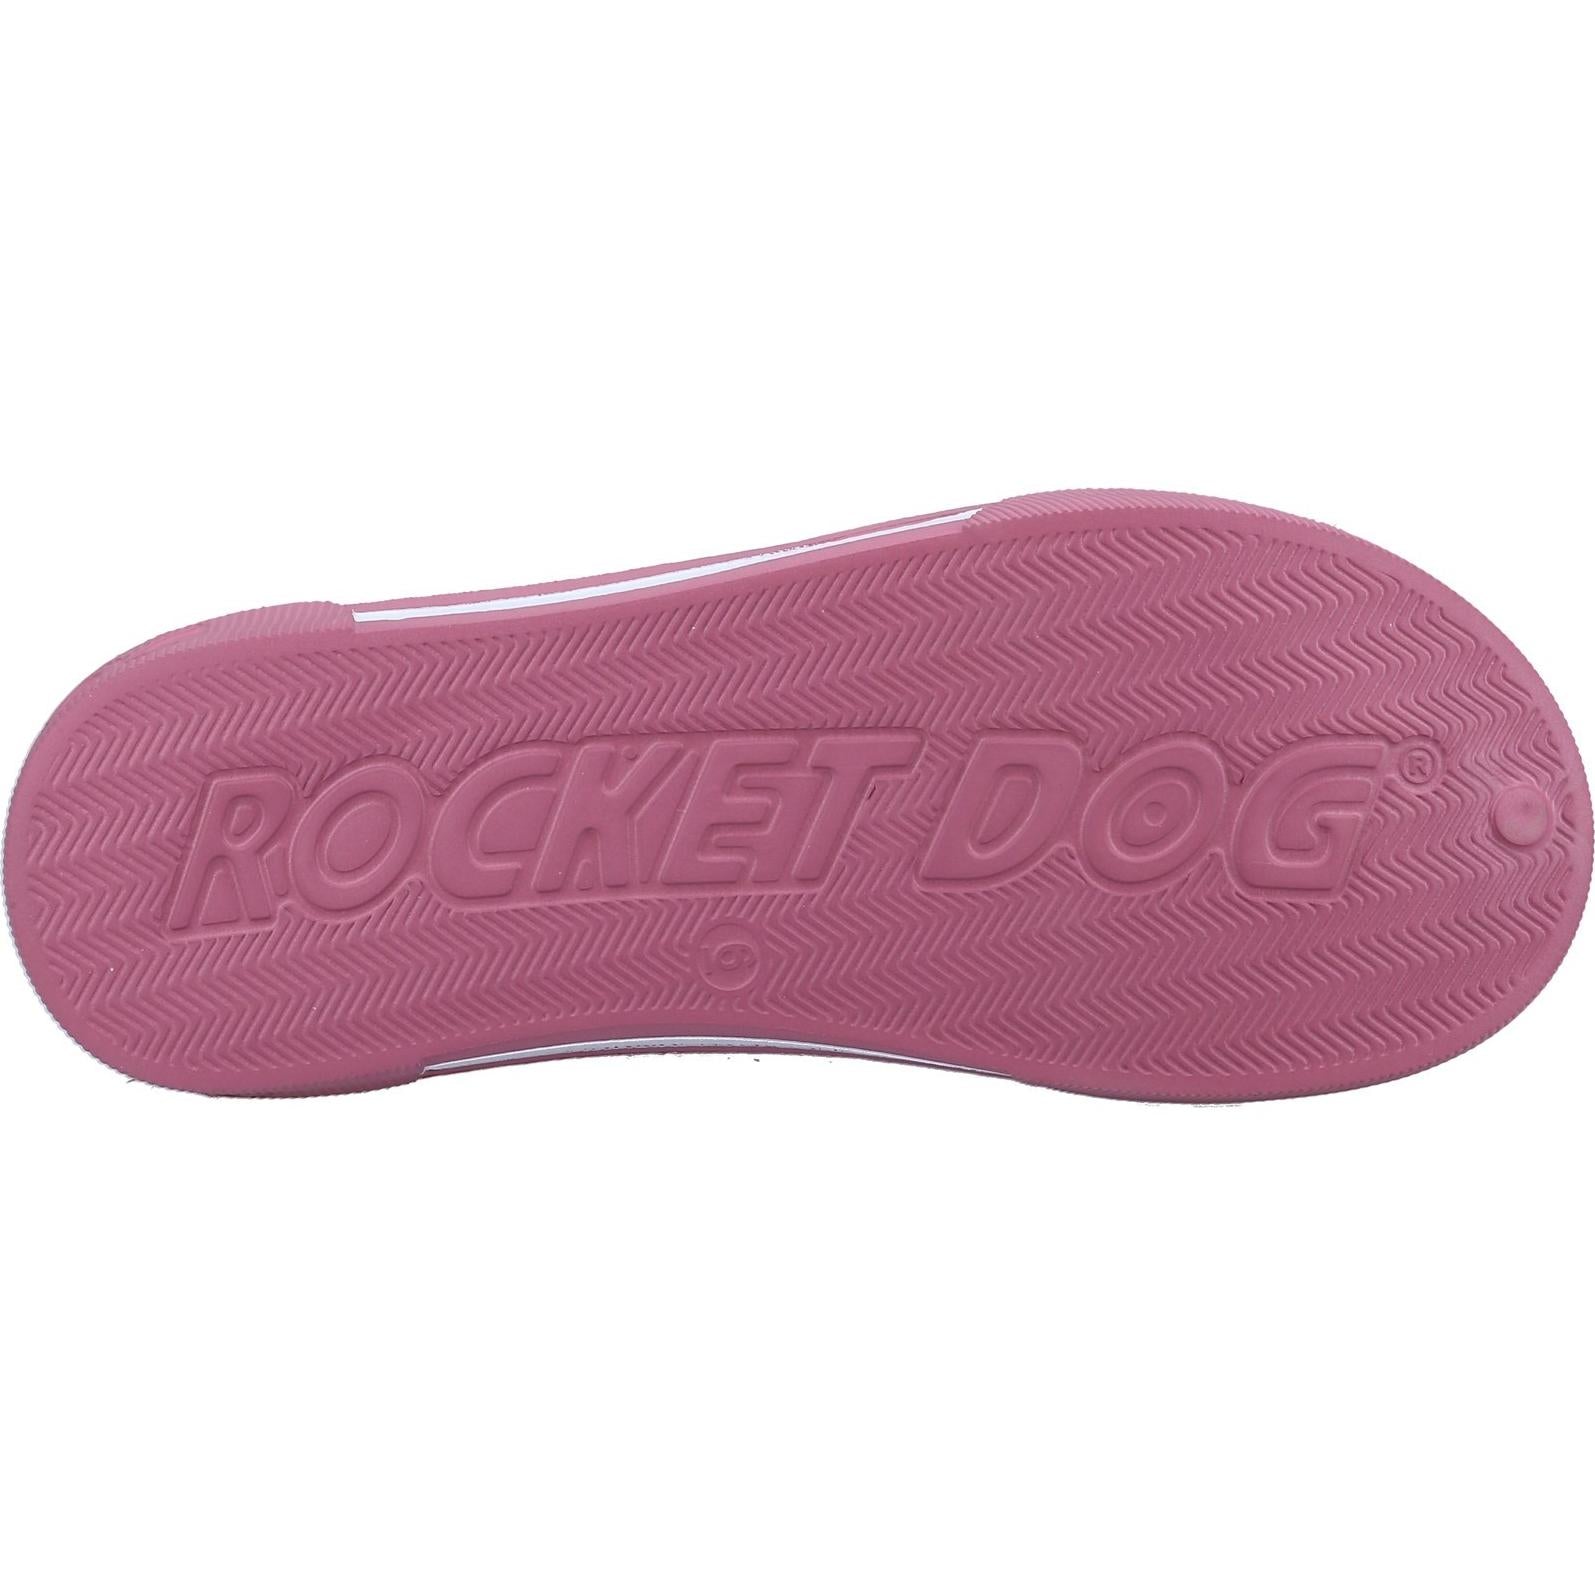 Rocket Dog Rocket Dog Jazzin Jelly Casual Slip On Trainers